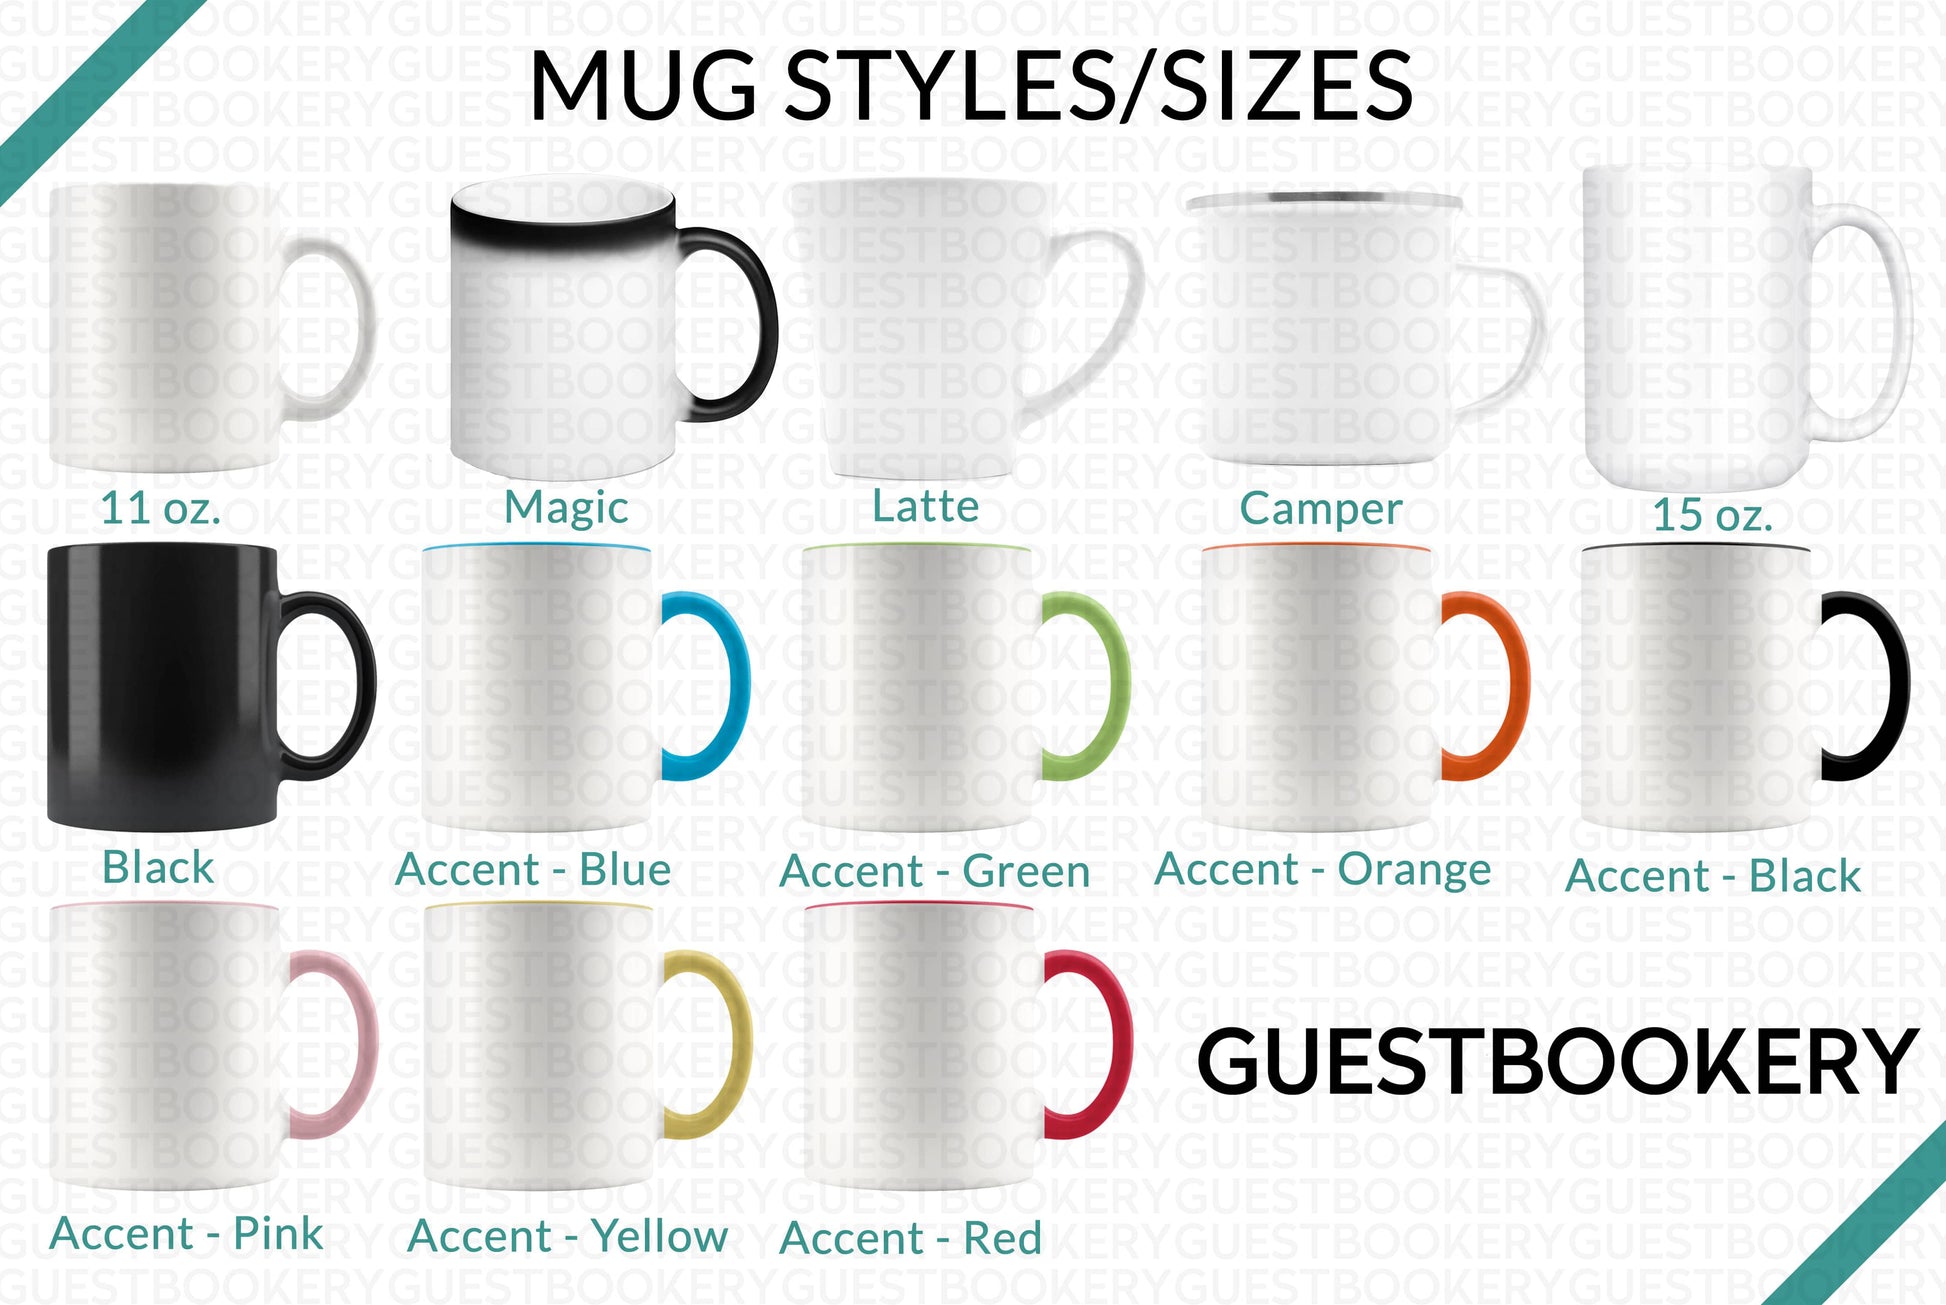 Custom Bridesmaid Mug